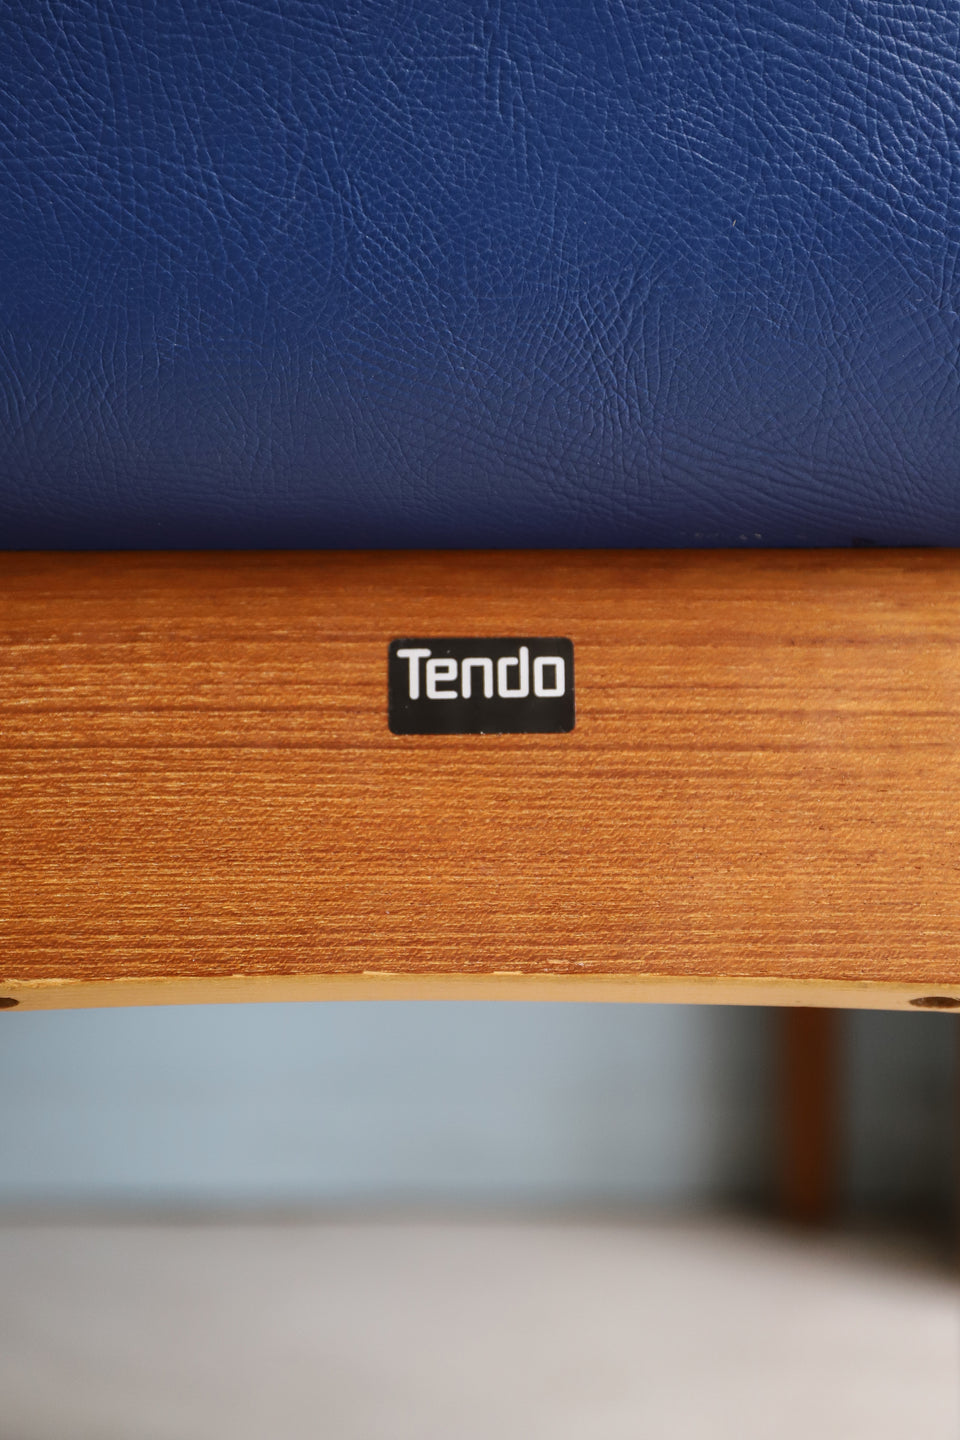 Tendo Antler Arm Chair Teakwood/天童木工 アントラー アームチェア チーク材 プライウッド ジャパニーズモダン